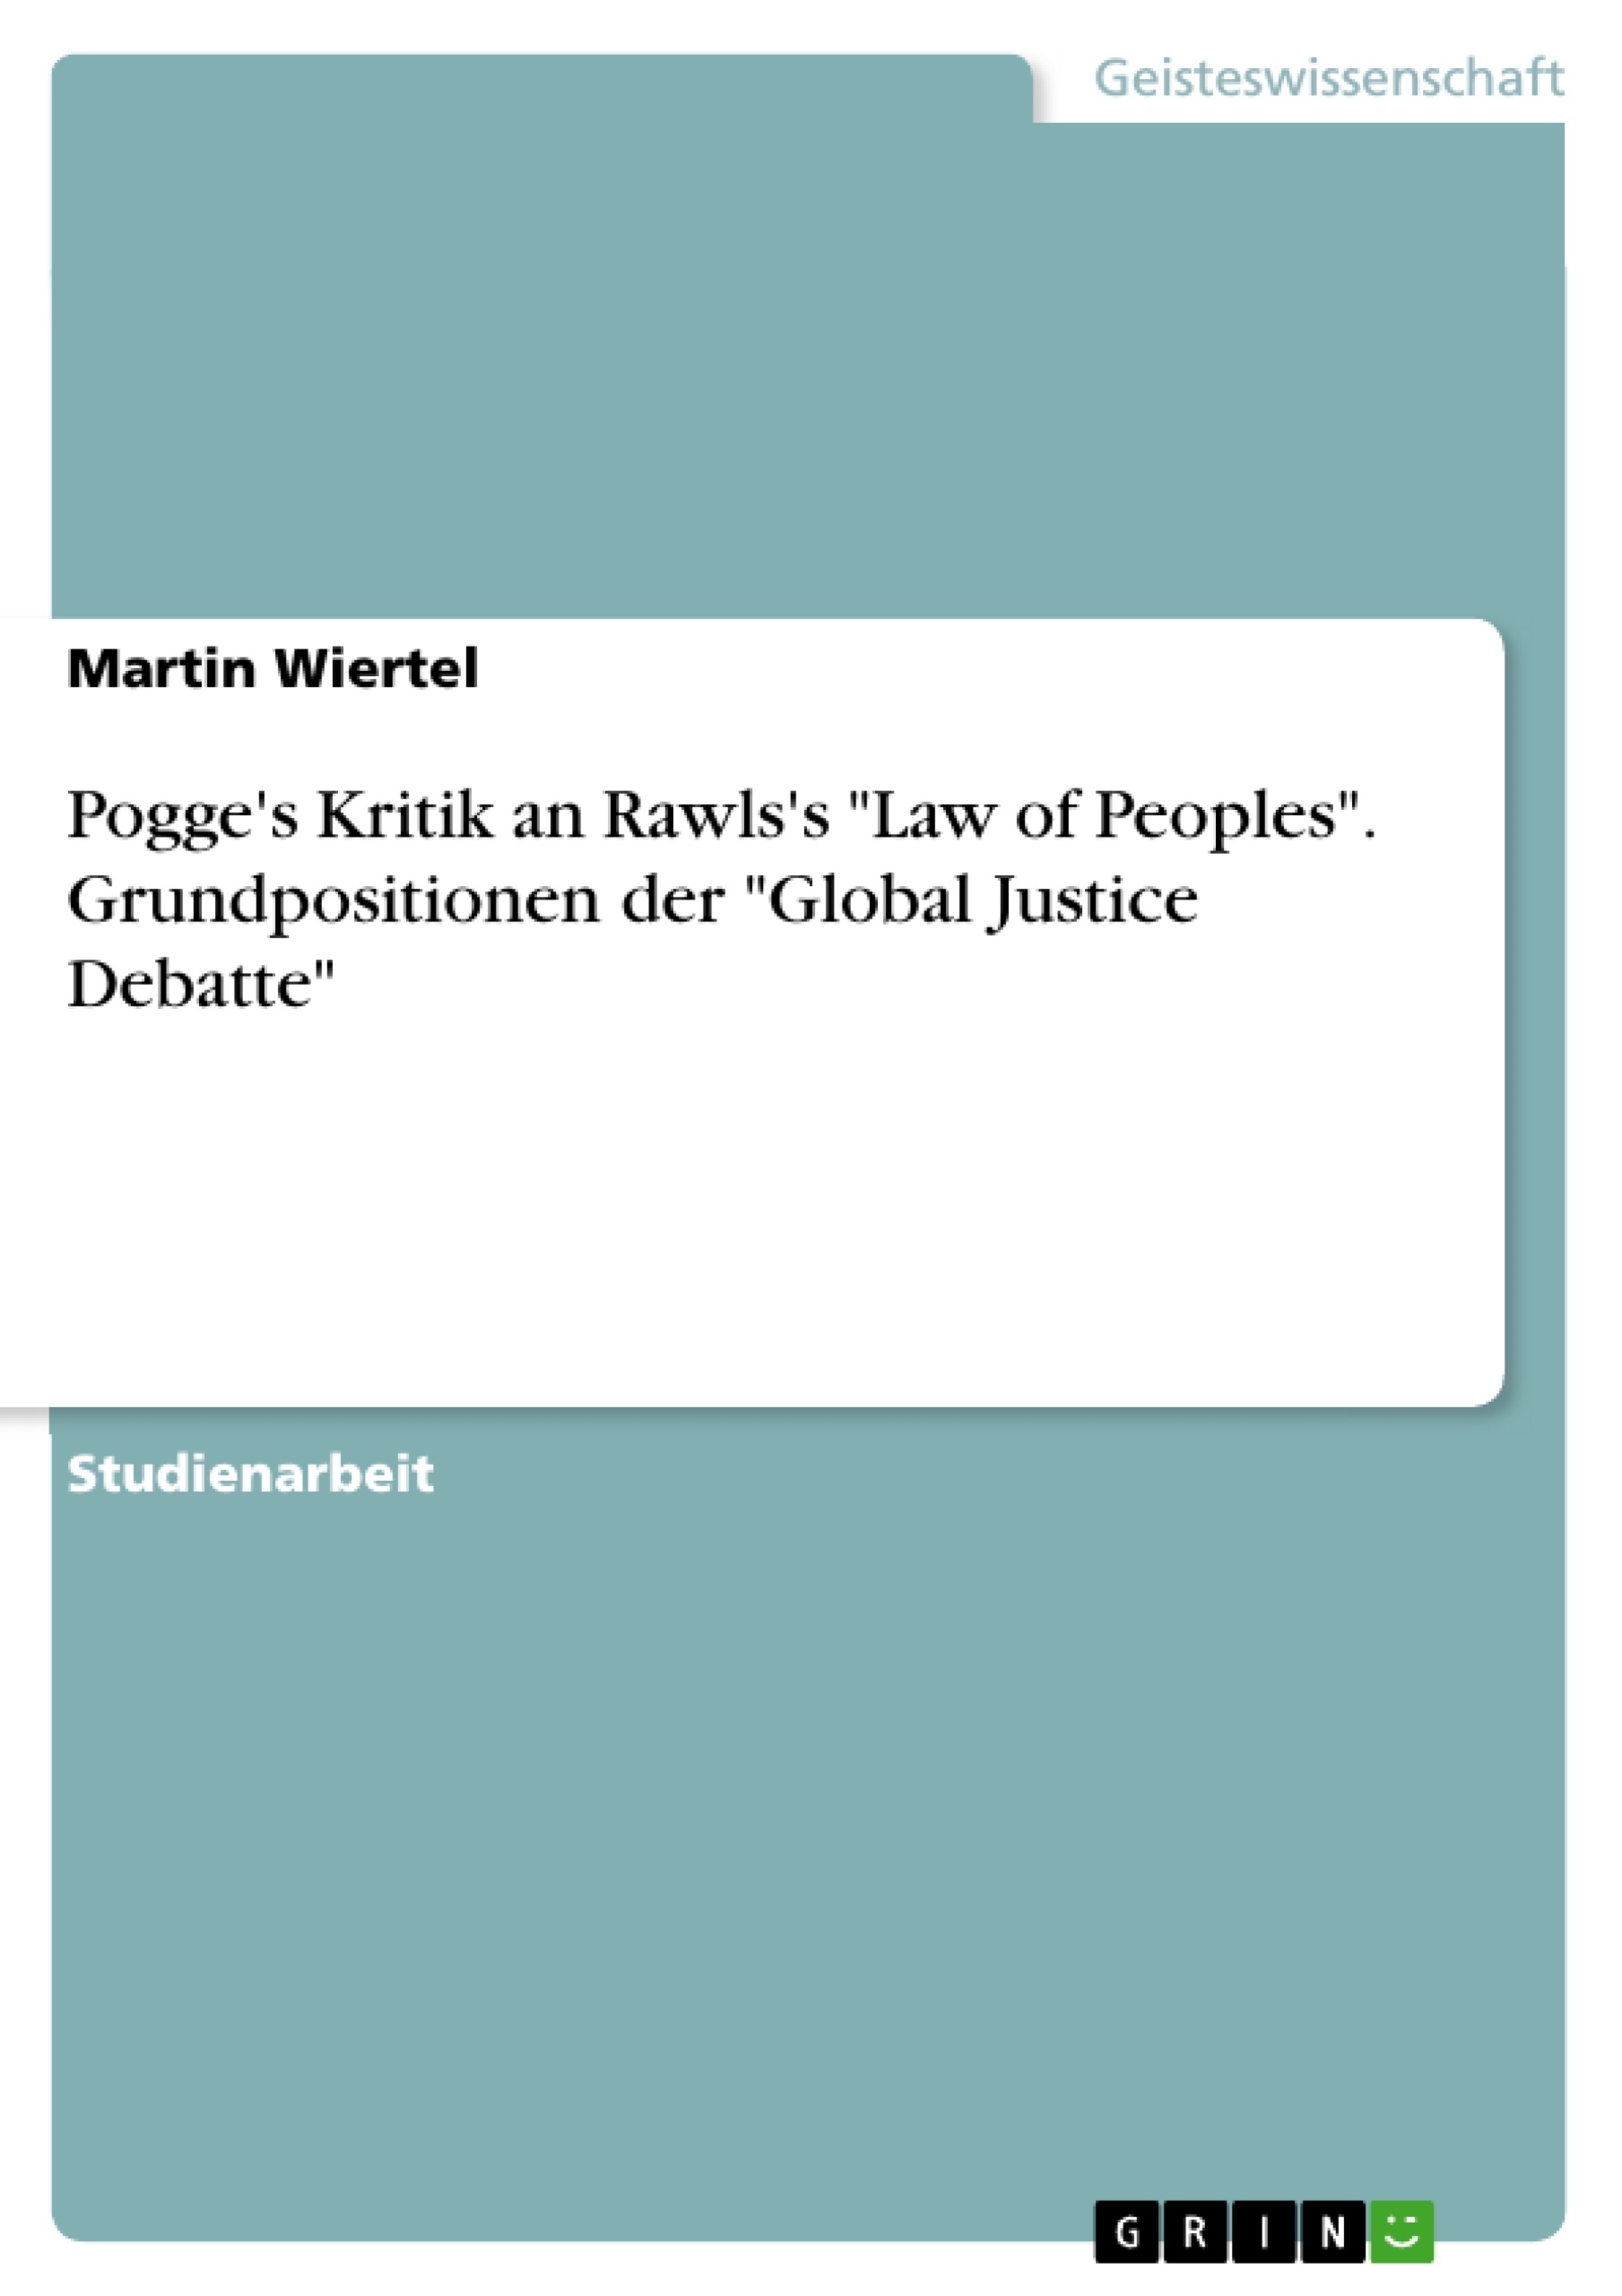 Titre: Pogge's Kritik an Rawls's  "Law of Peoples". Grundpositionen der "Global Justice Debatte"